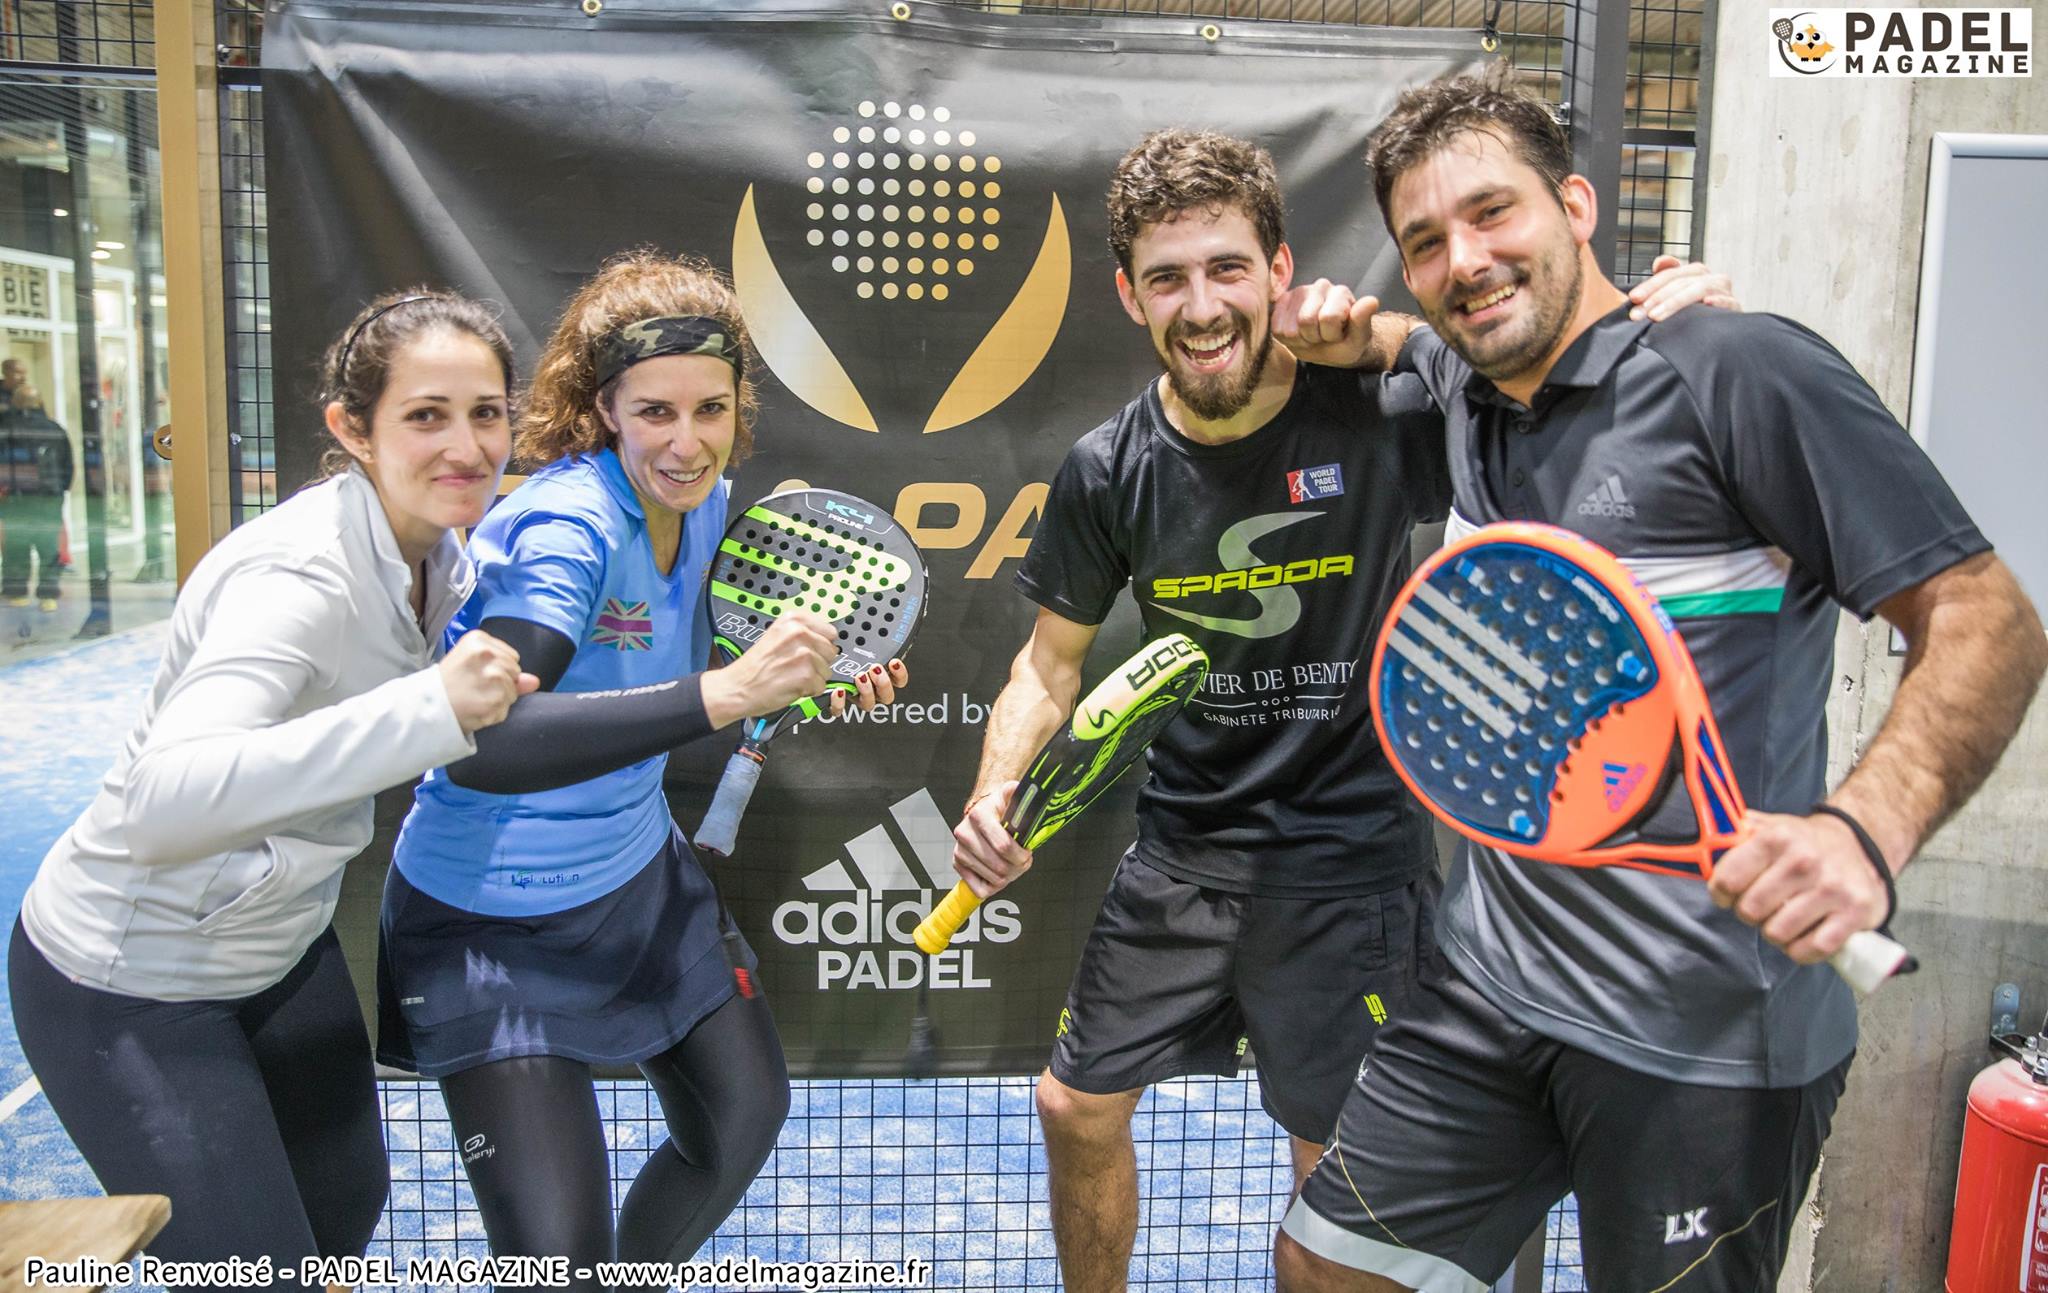 Lasheras / Prado and Salines / De Benito win at the Open Casa Padel